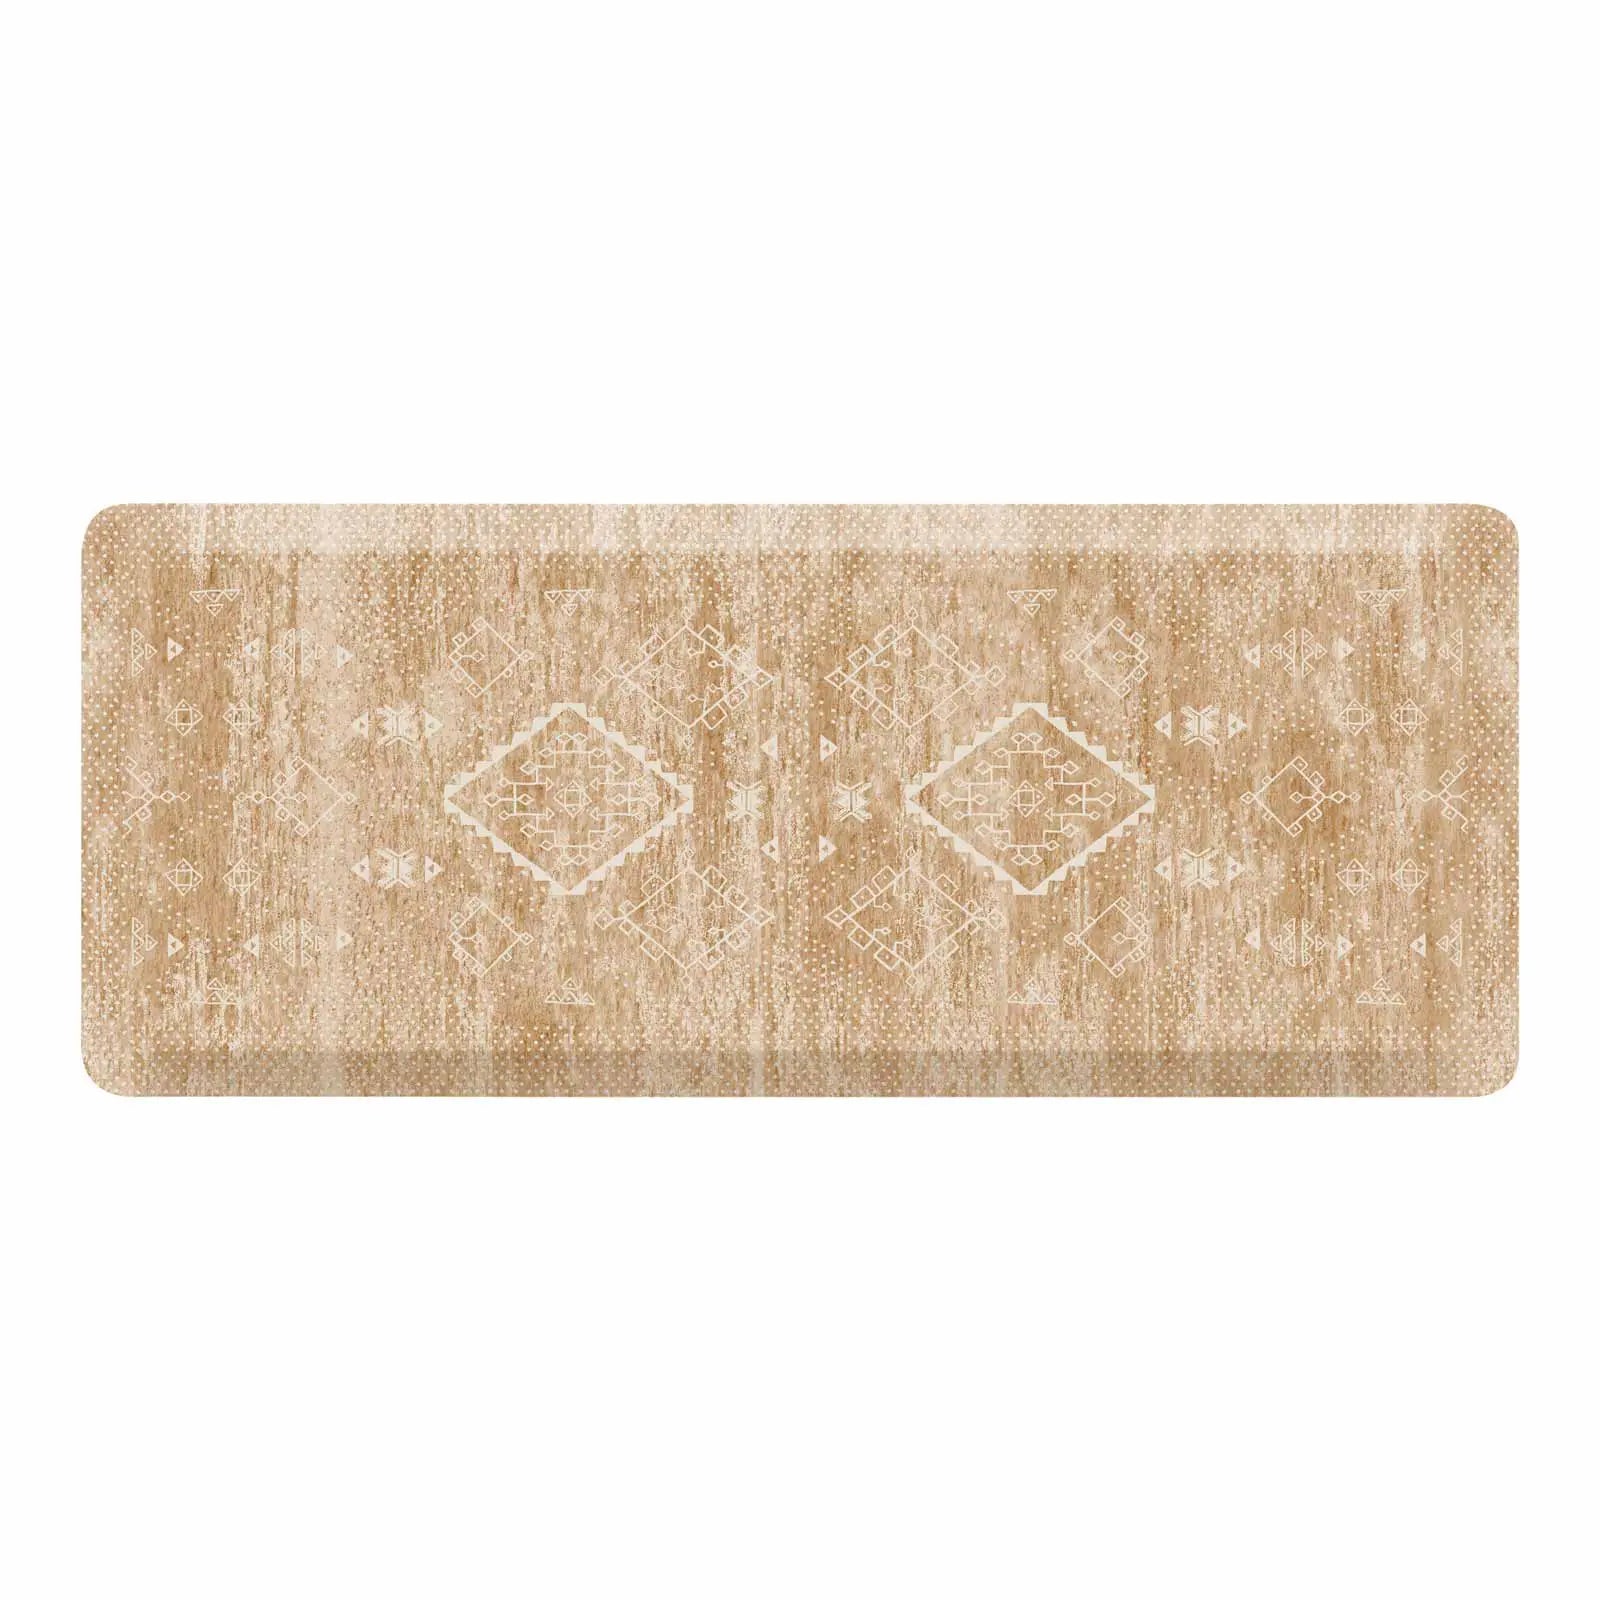 Ula Amber brown minimal boho pattern kitchen mat in size 22x54